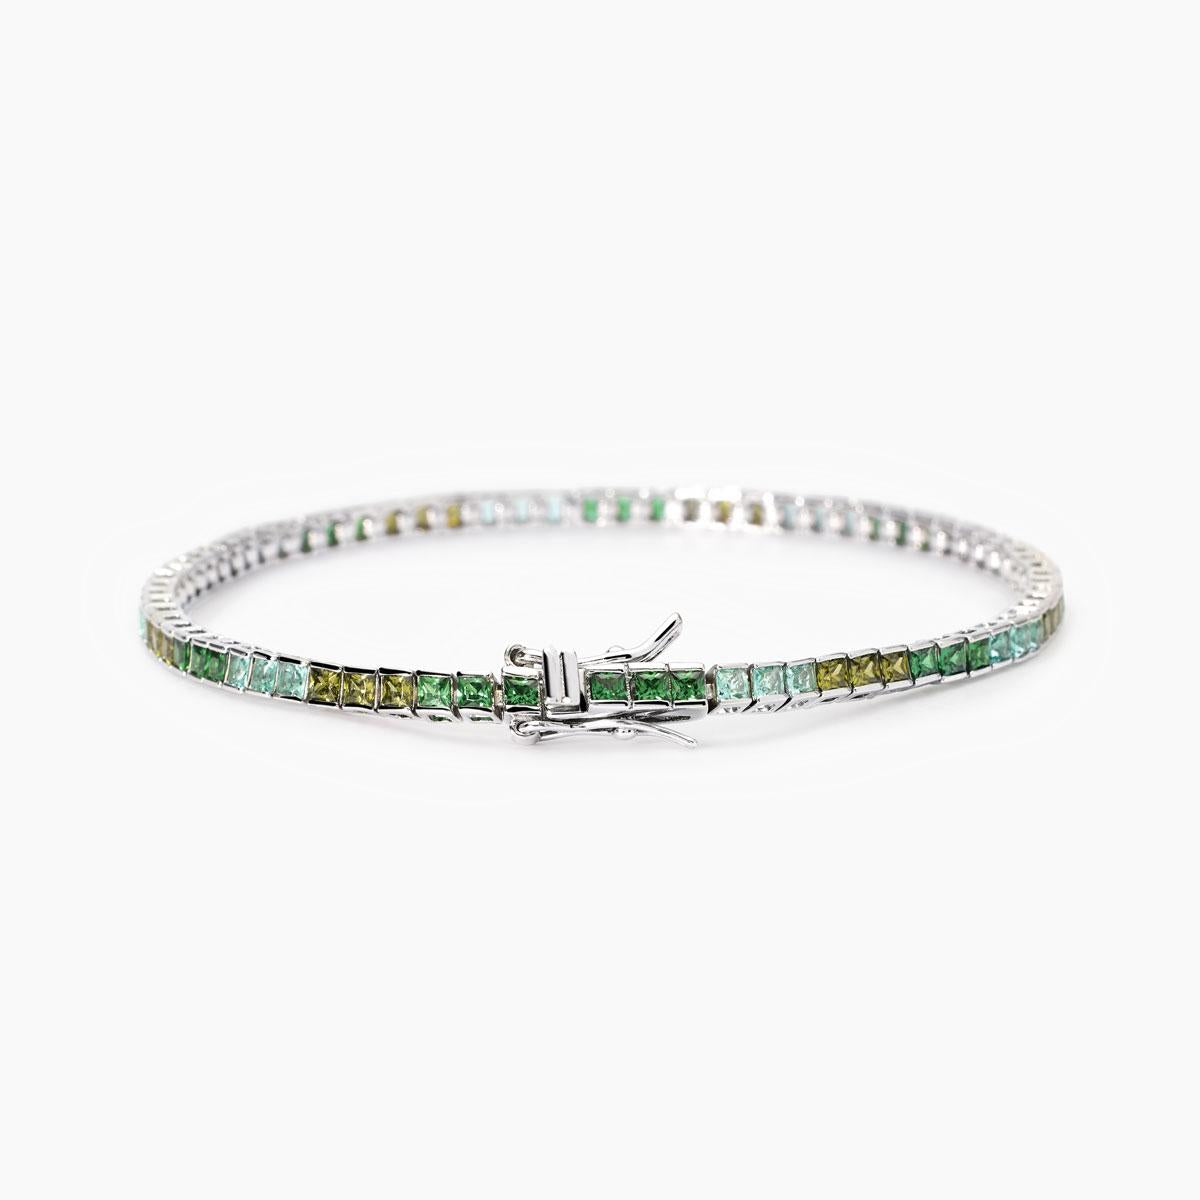 Mabina Femme - Bracelet tennis avec zircons multicolores verts TENNIS CLUB - 533882